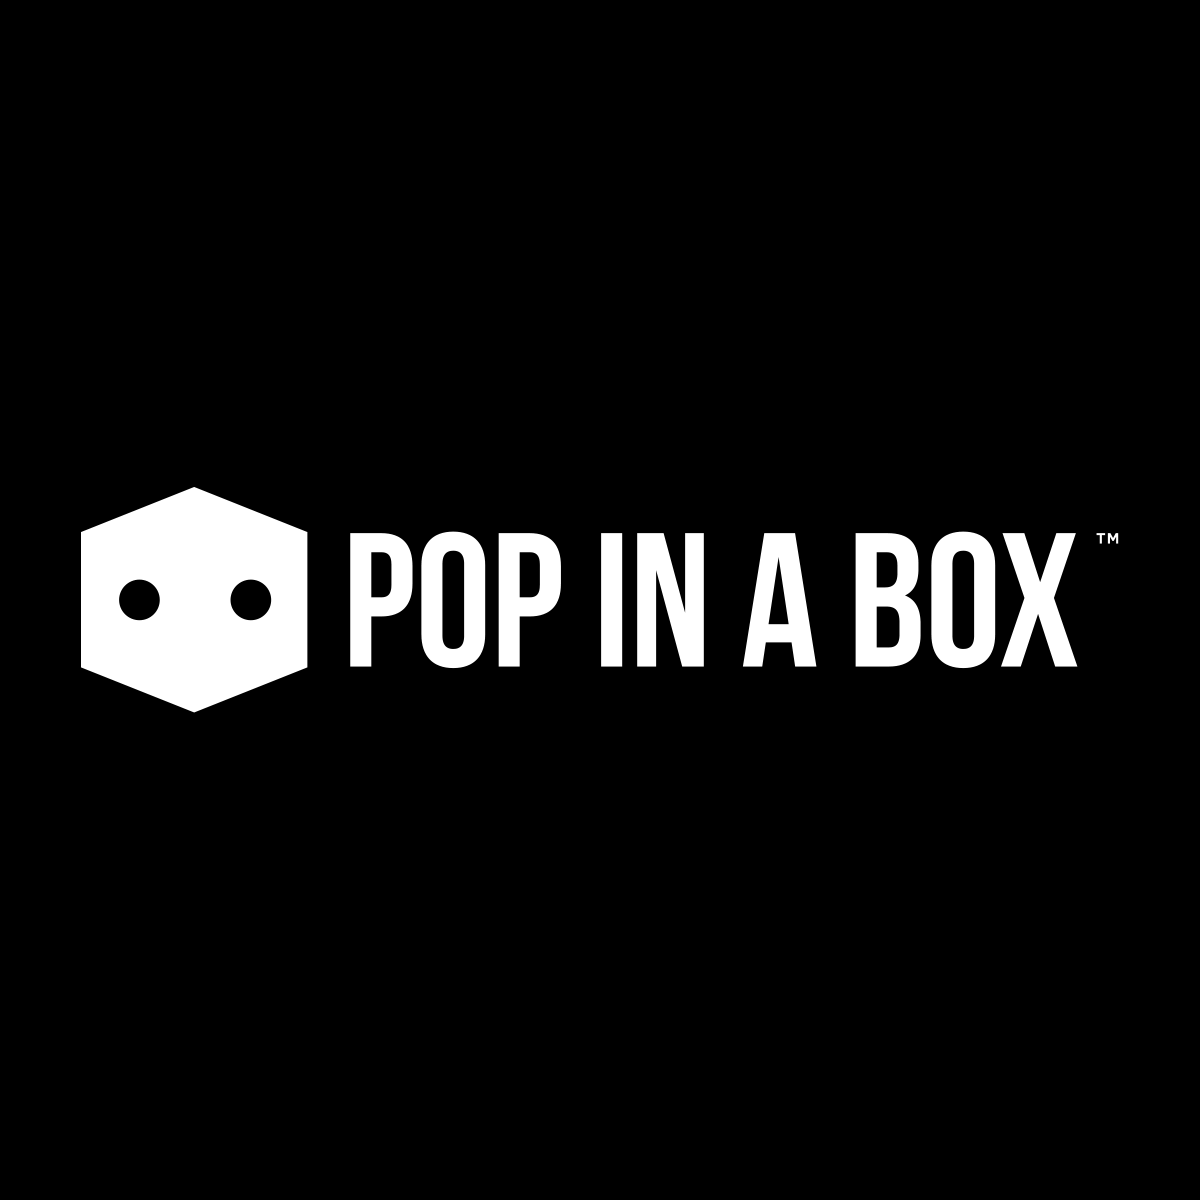 www.popinabox.us